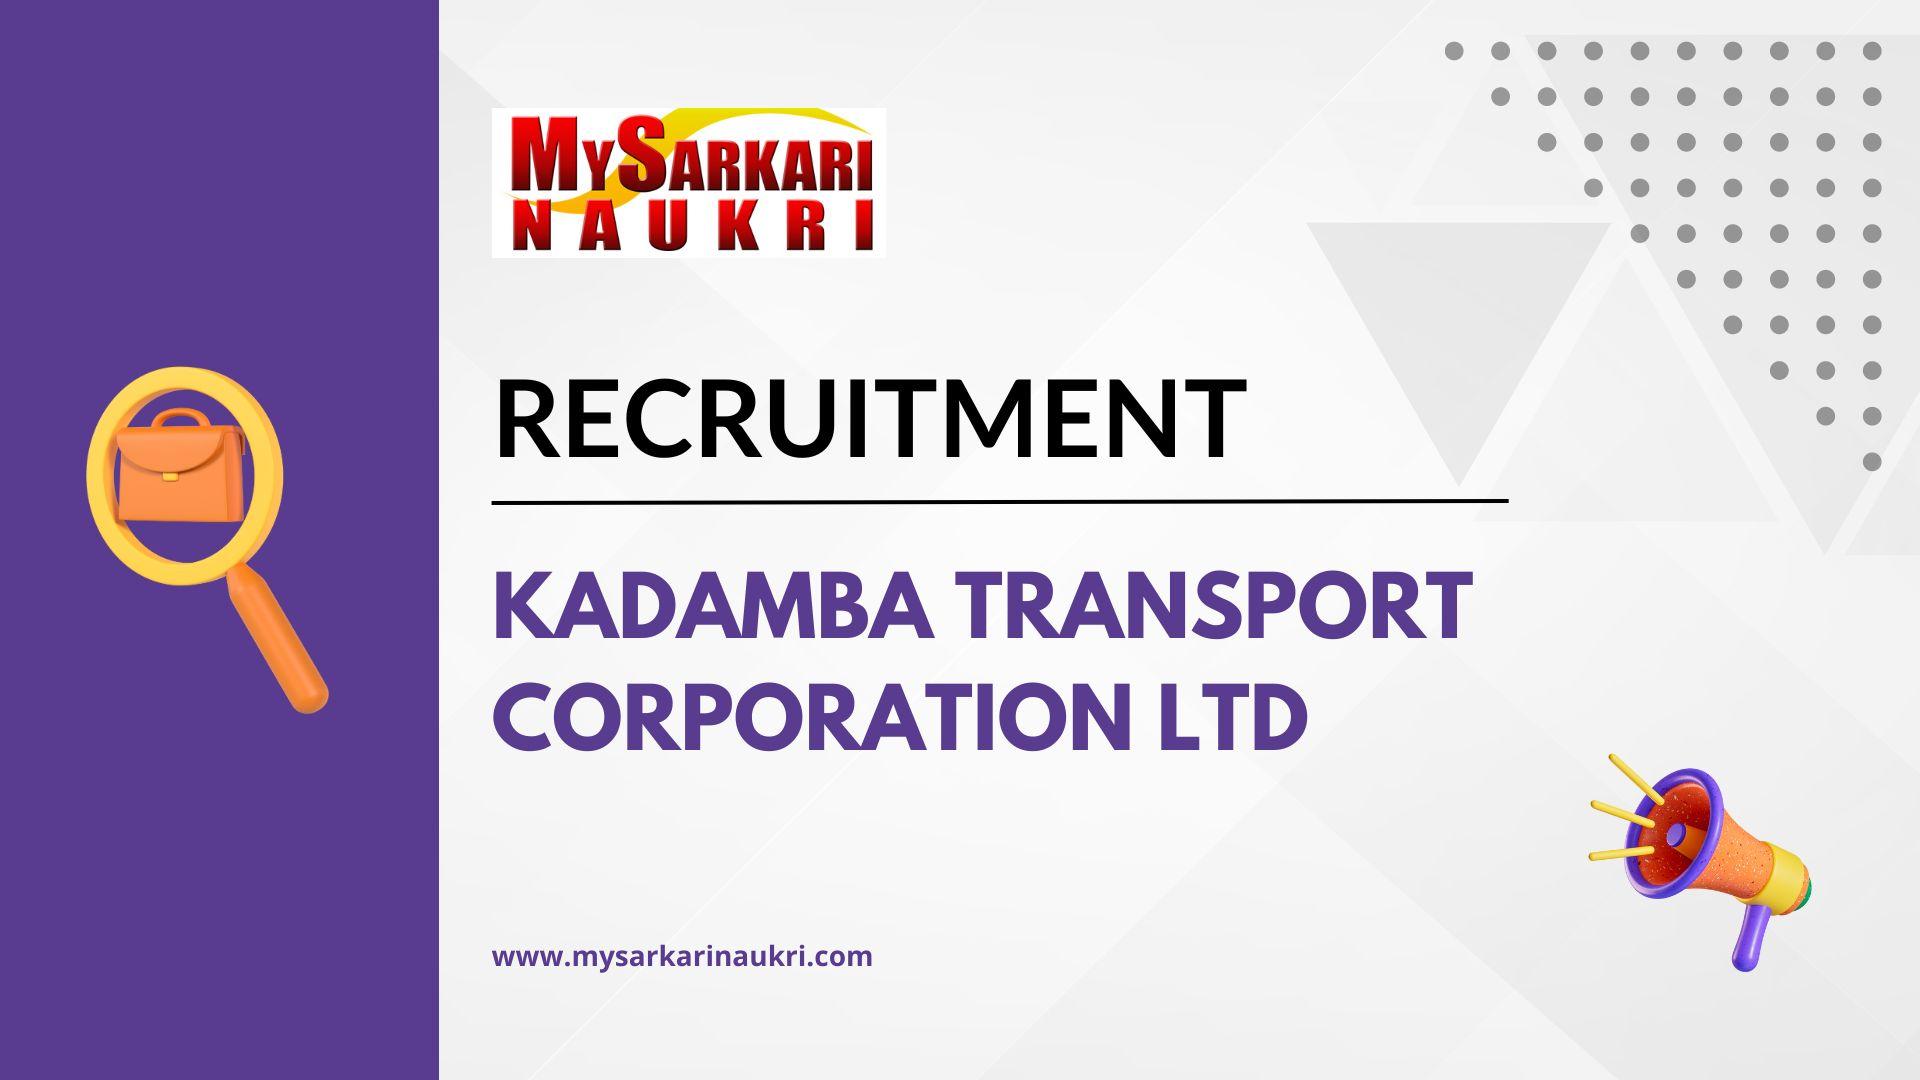 Kadamba Transport Corporation Ltd Recruitment